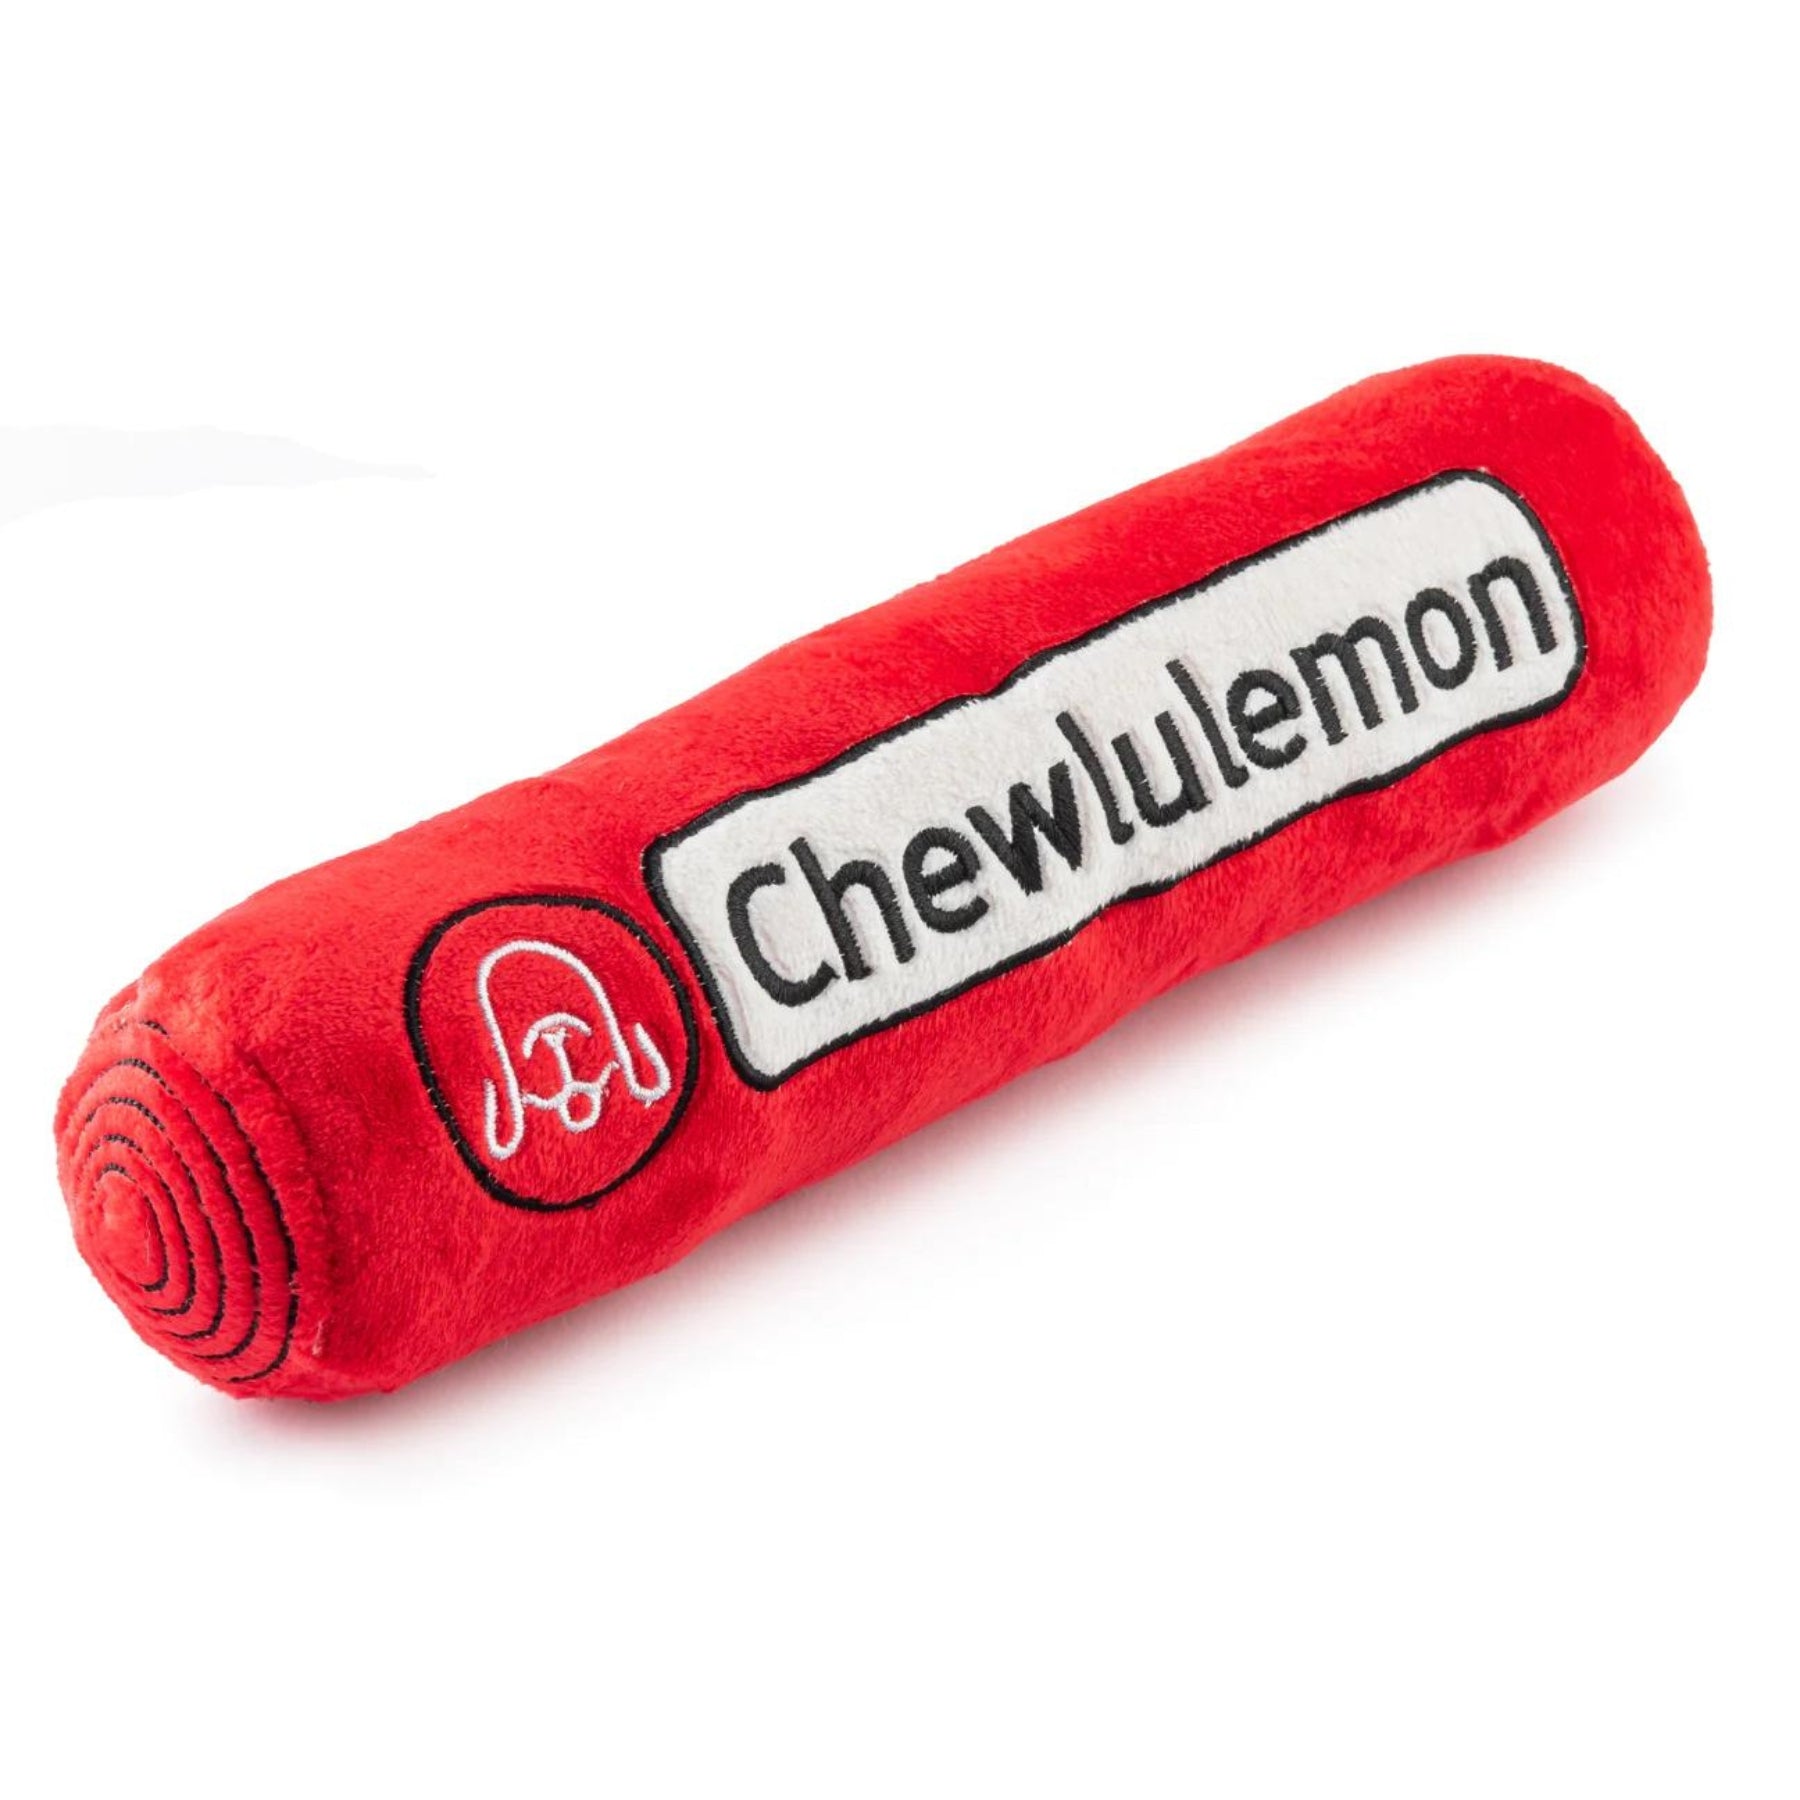 Chewlulemon Yoga Mat - Pooch Luxury